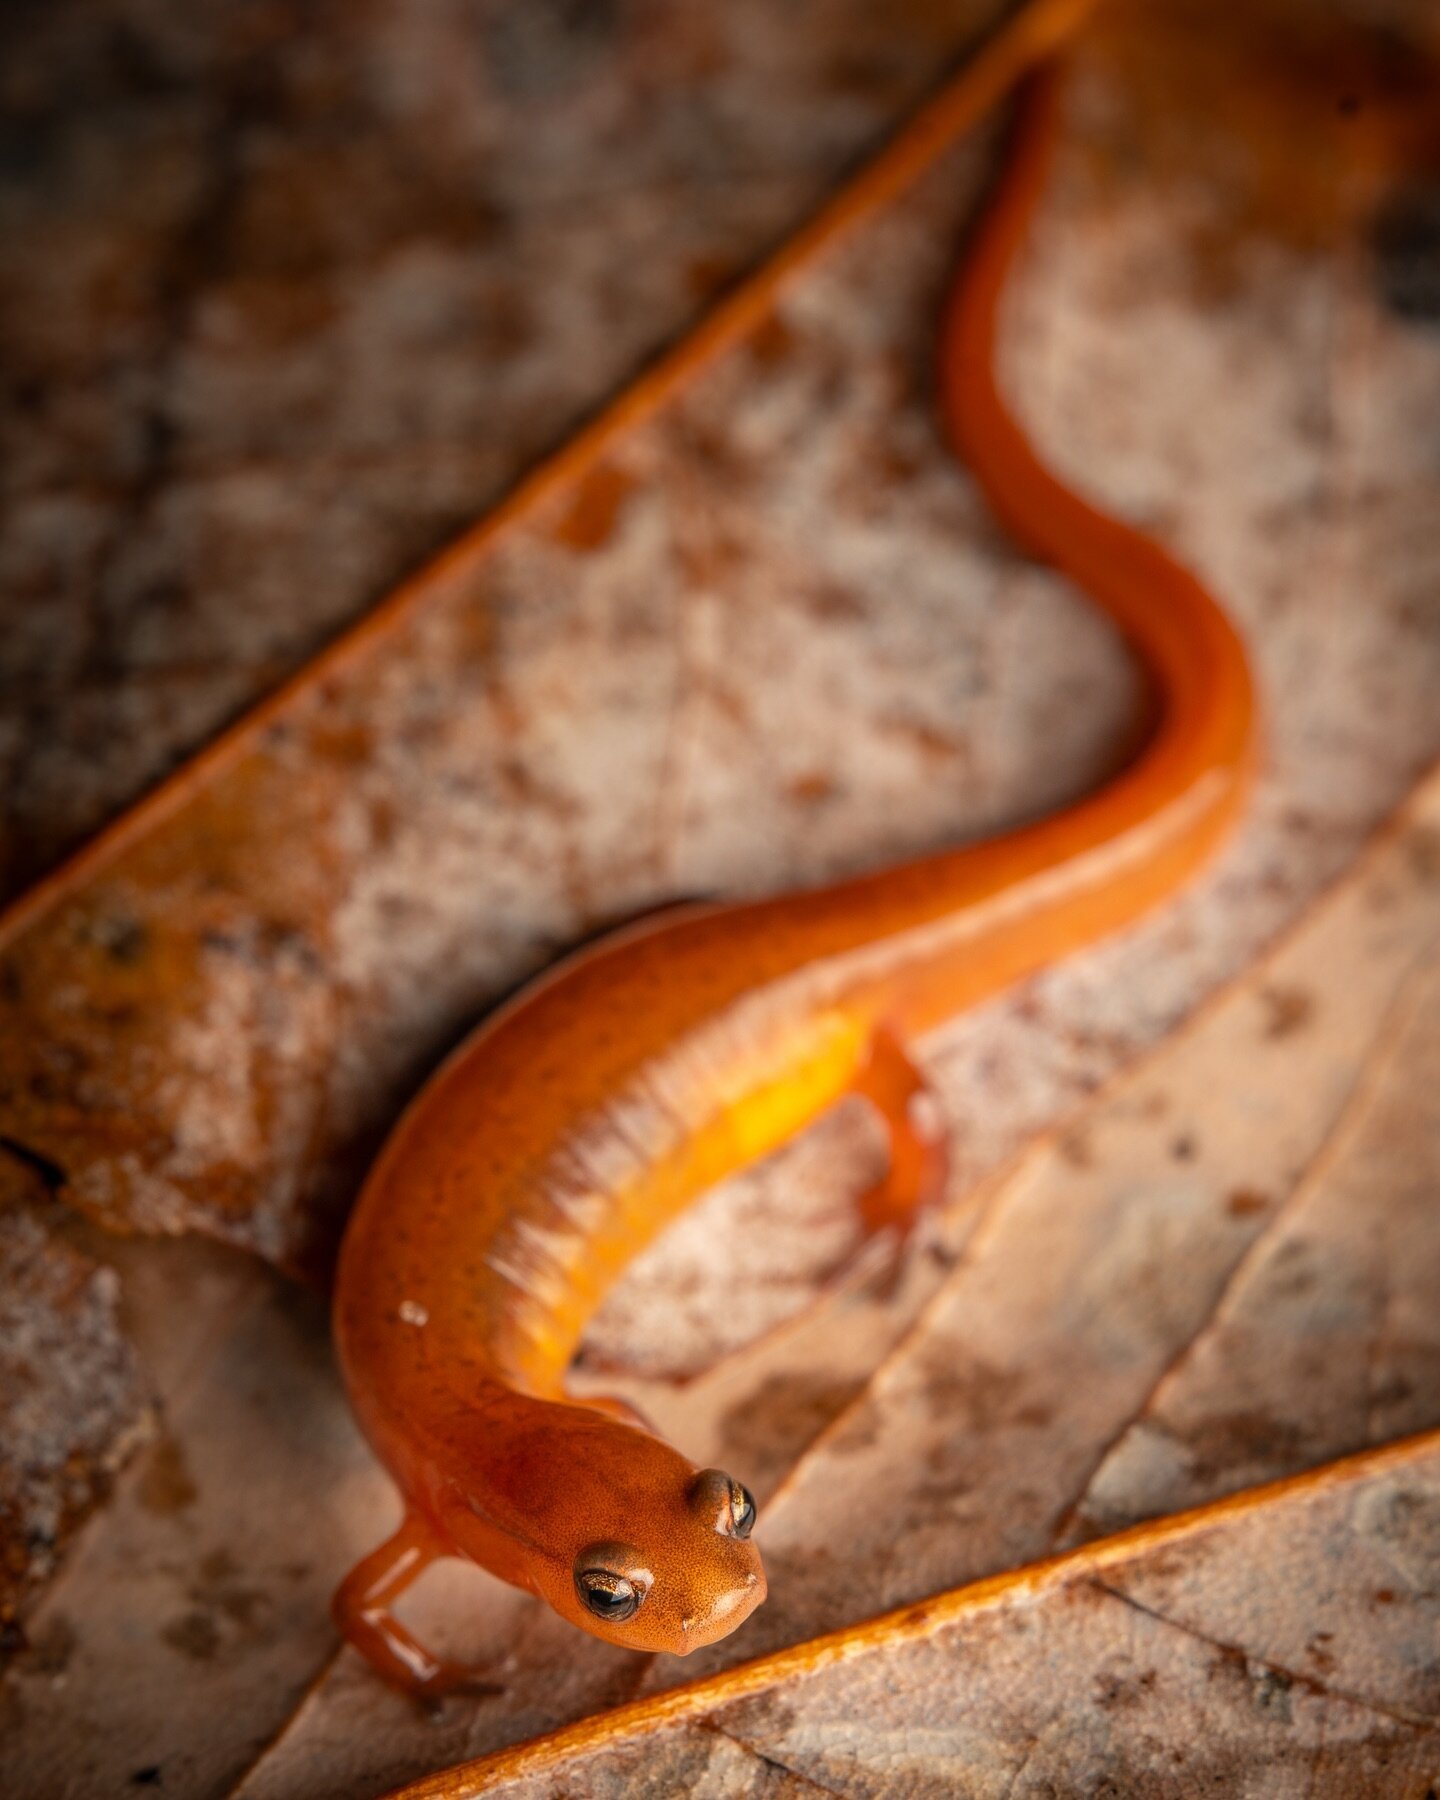 A very plump mama Carolina Sandhills salamander cruised in December! 

#herping #salamander #carolinasandhillssalamander #euryceaarenicola #wildlife #nature #wildlifephotography